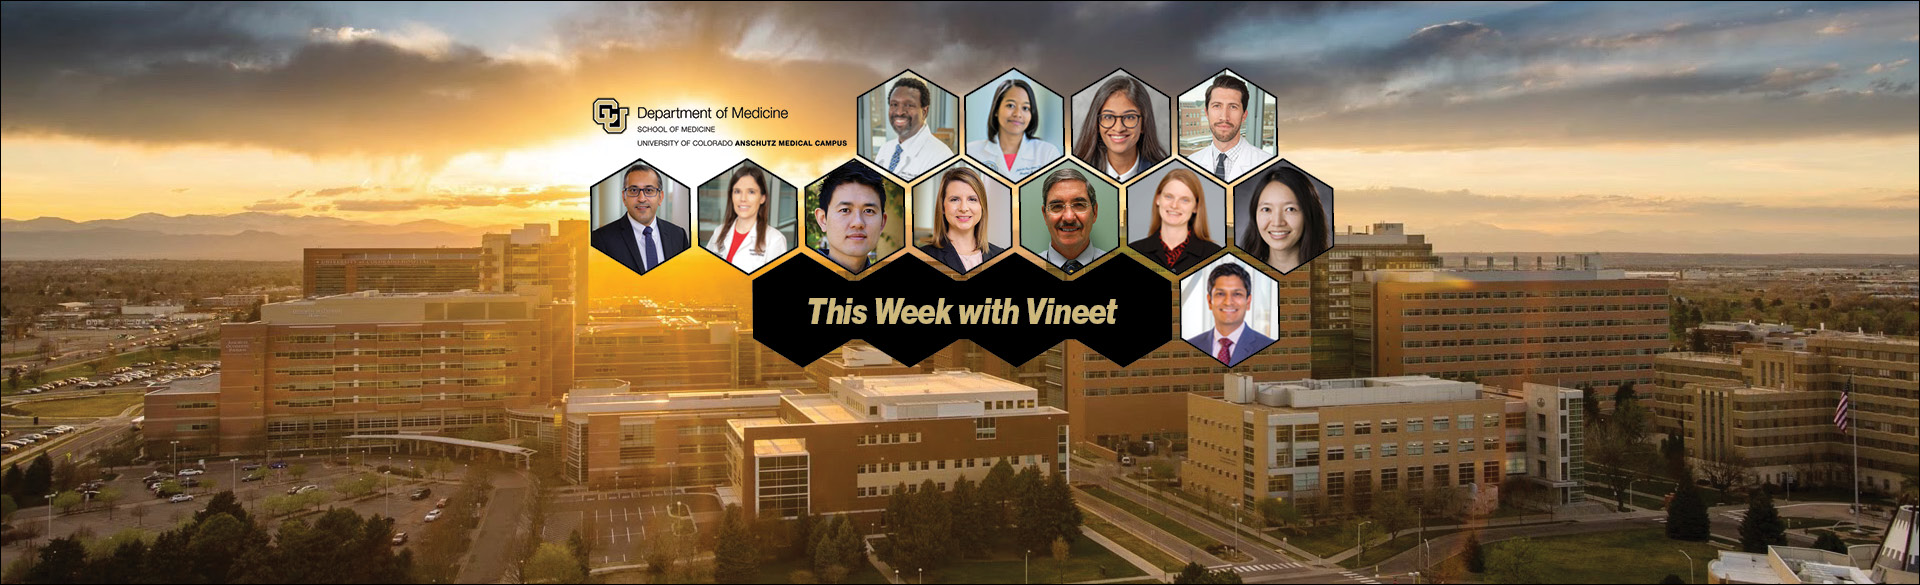 Department of Medicine: This Week with Vineet